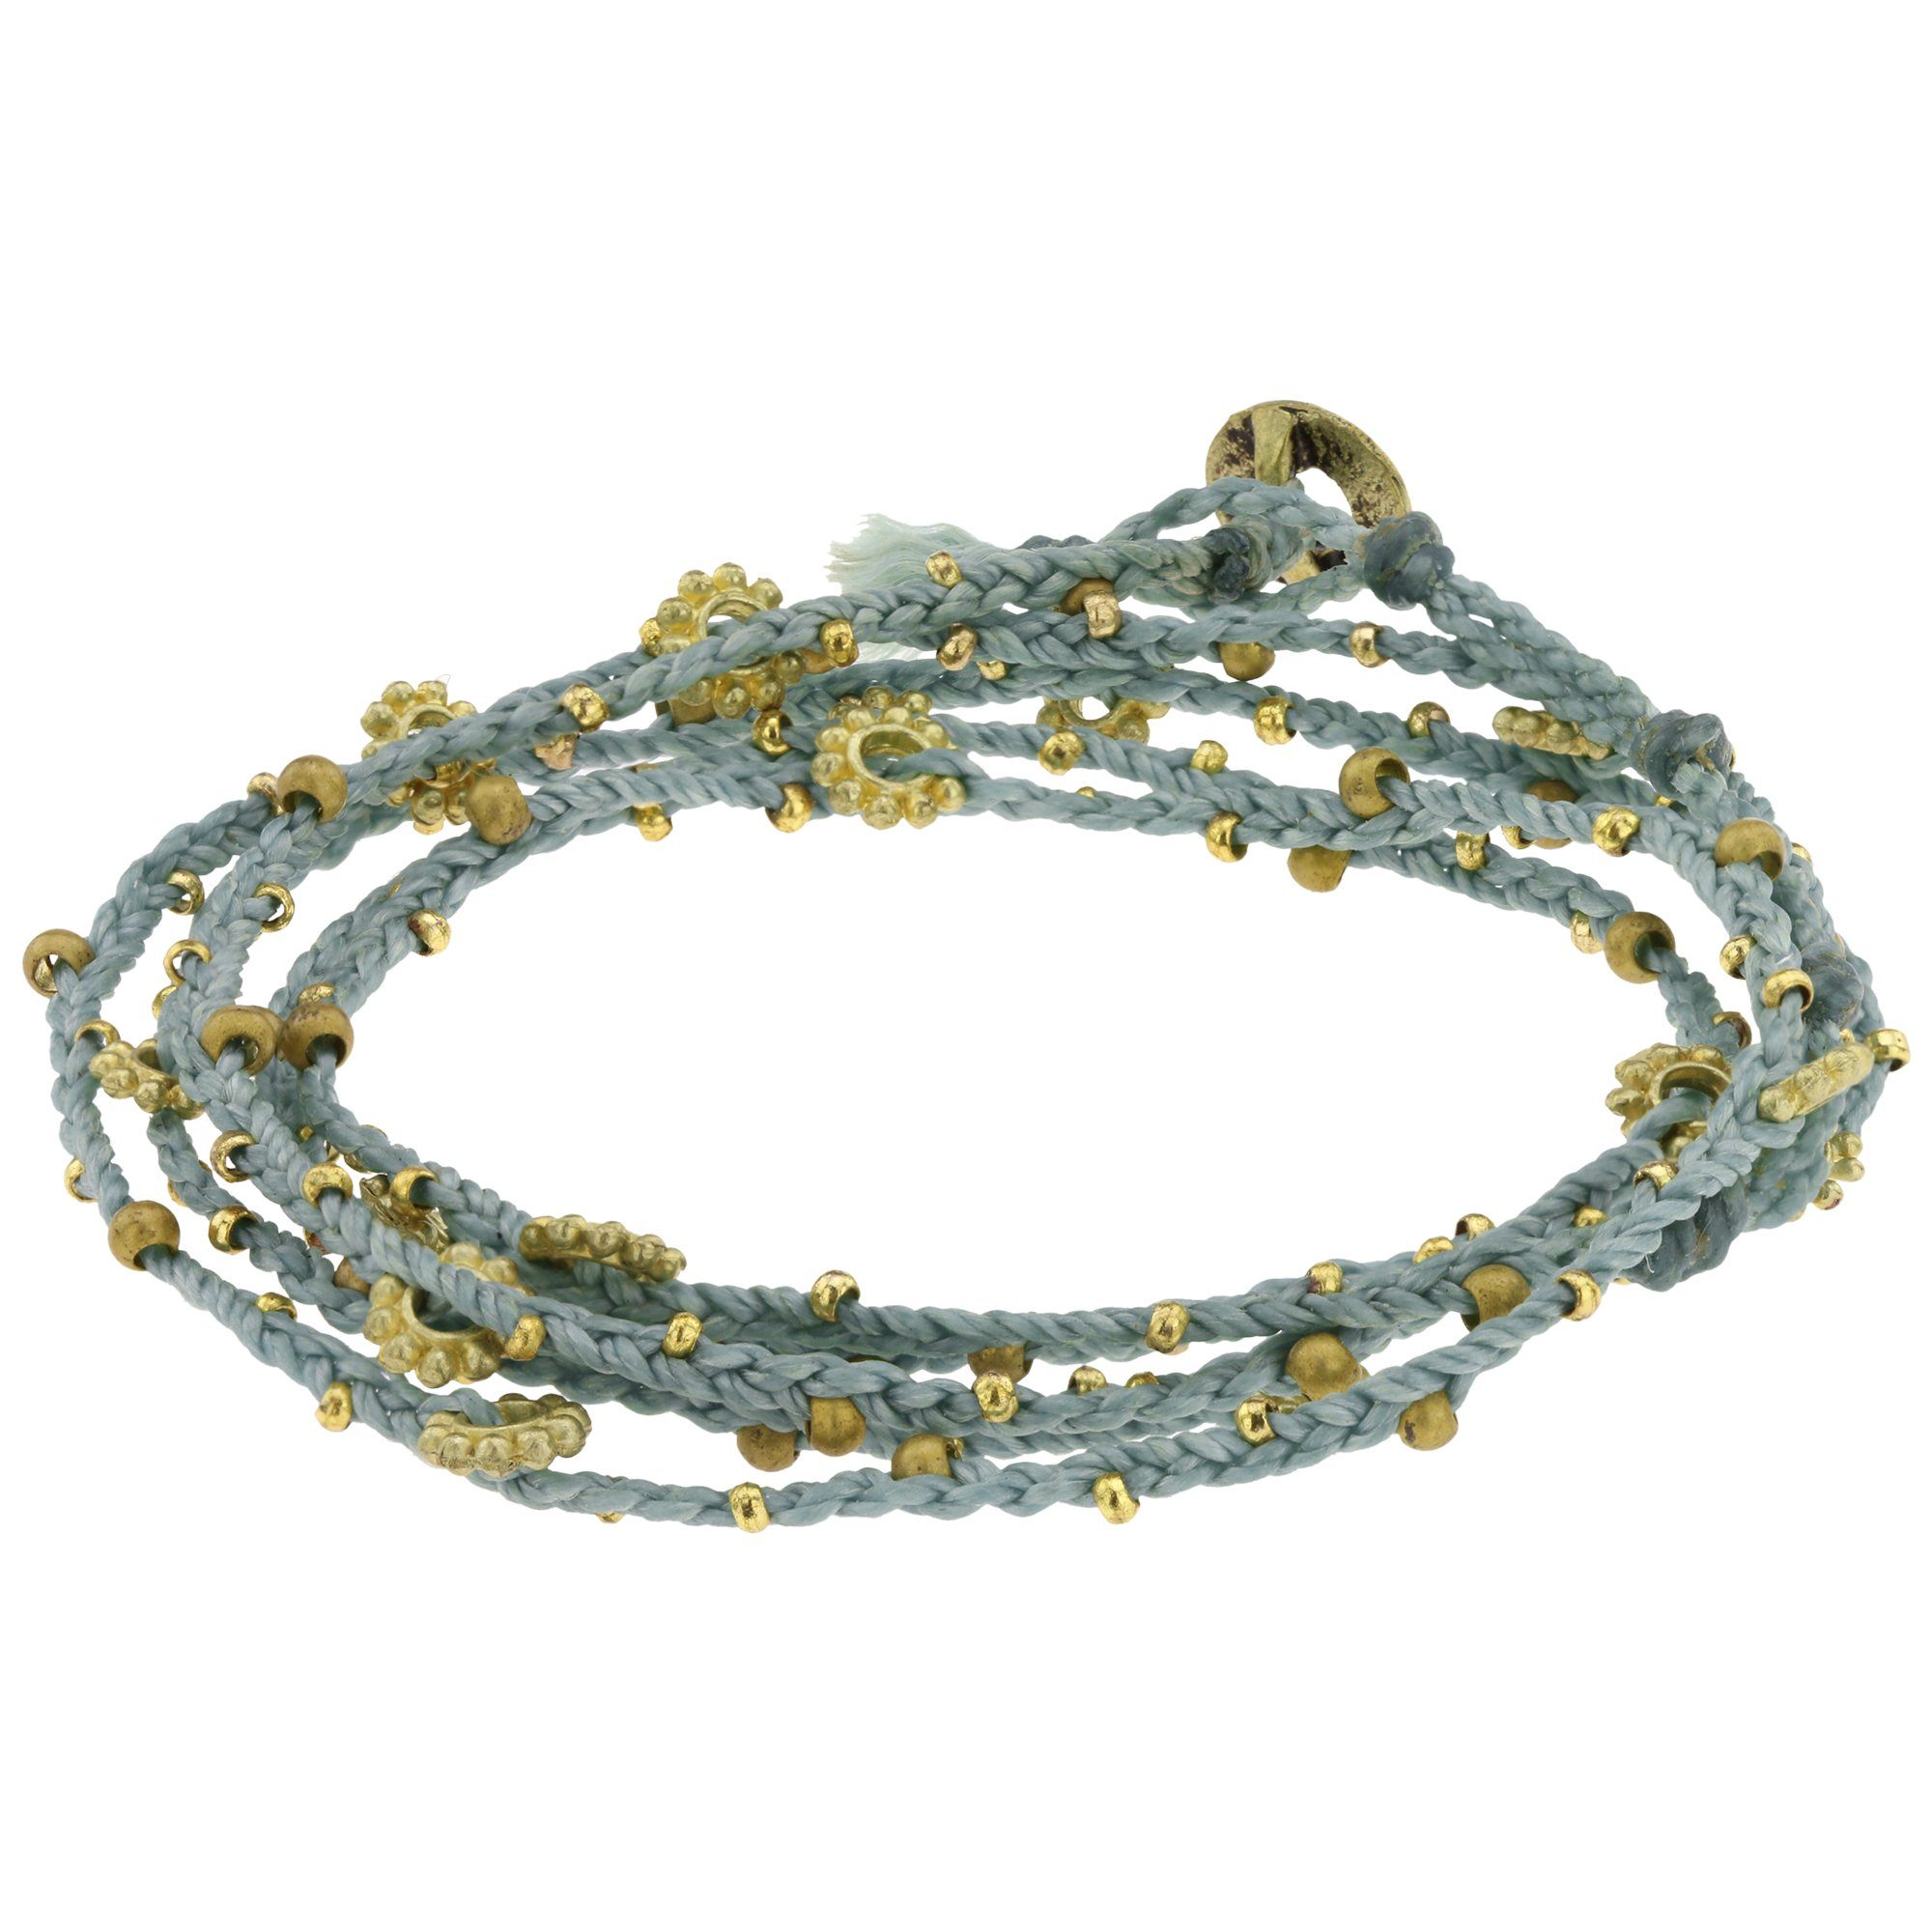 101 Inspirational Beads Bracelet/Necklace - Sage